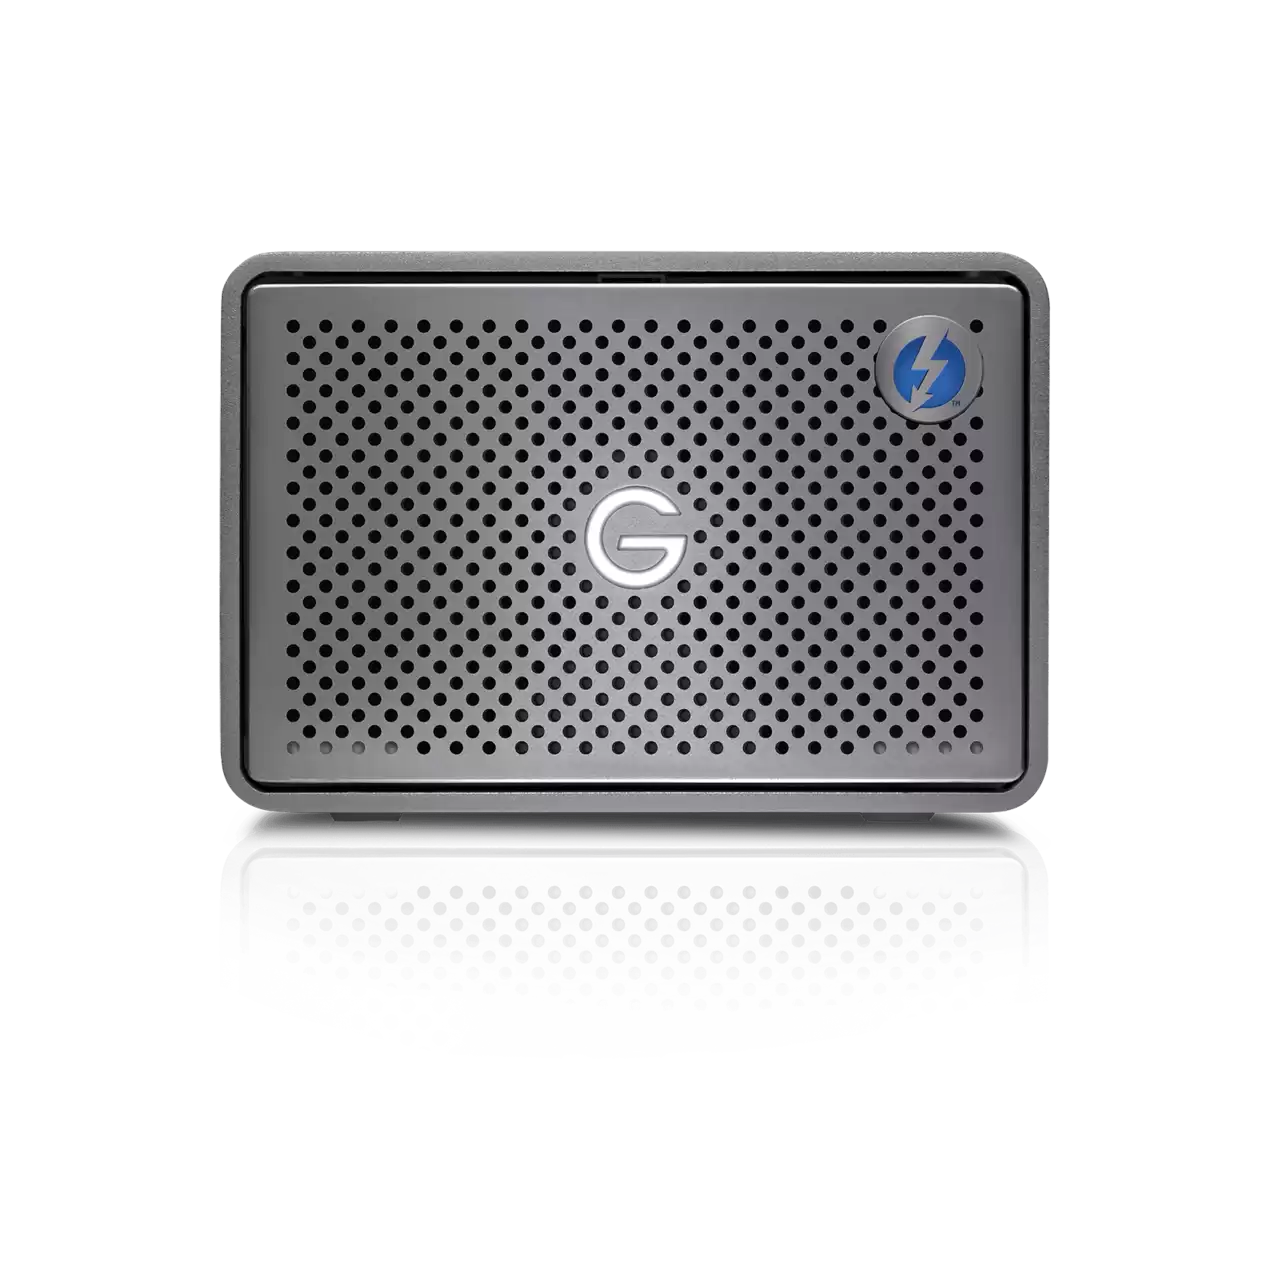 SanDisk Professional G-RAID 2 - Enterprise-Class 2-Bay Desktop Drive, 7200RPM Ultrastar Drive Inside, Thunderbolt 3, USB-C, HDMI Port